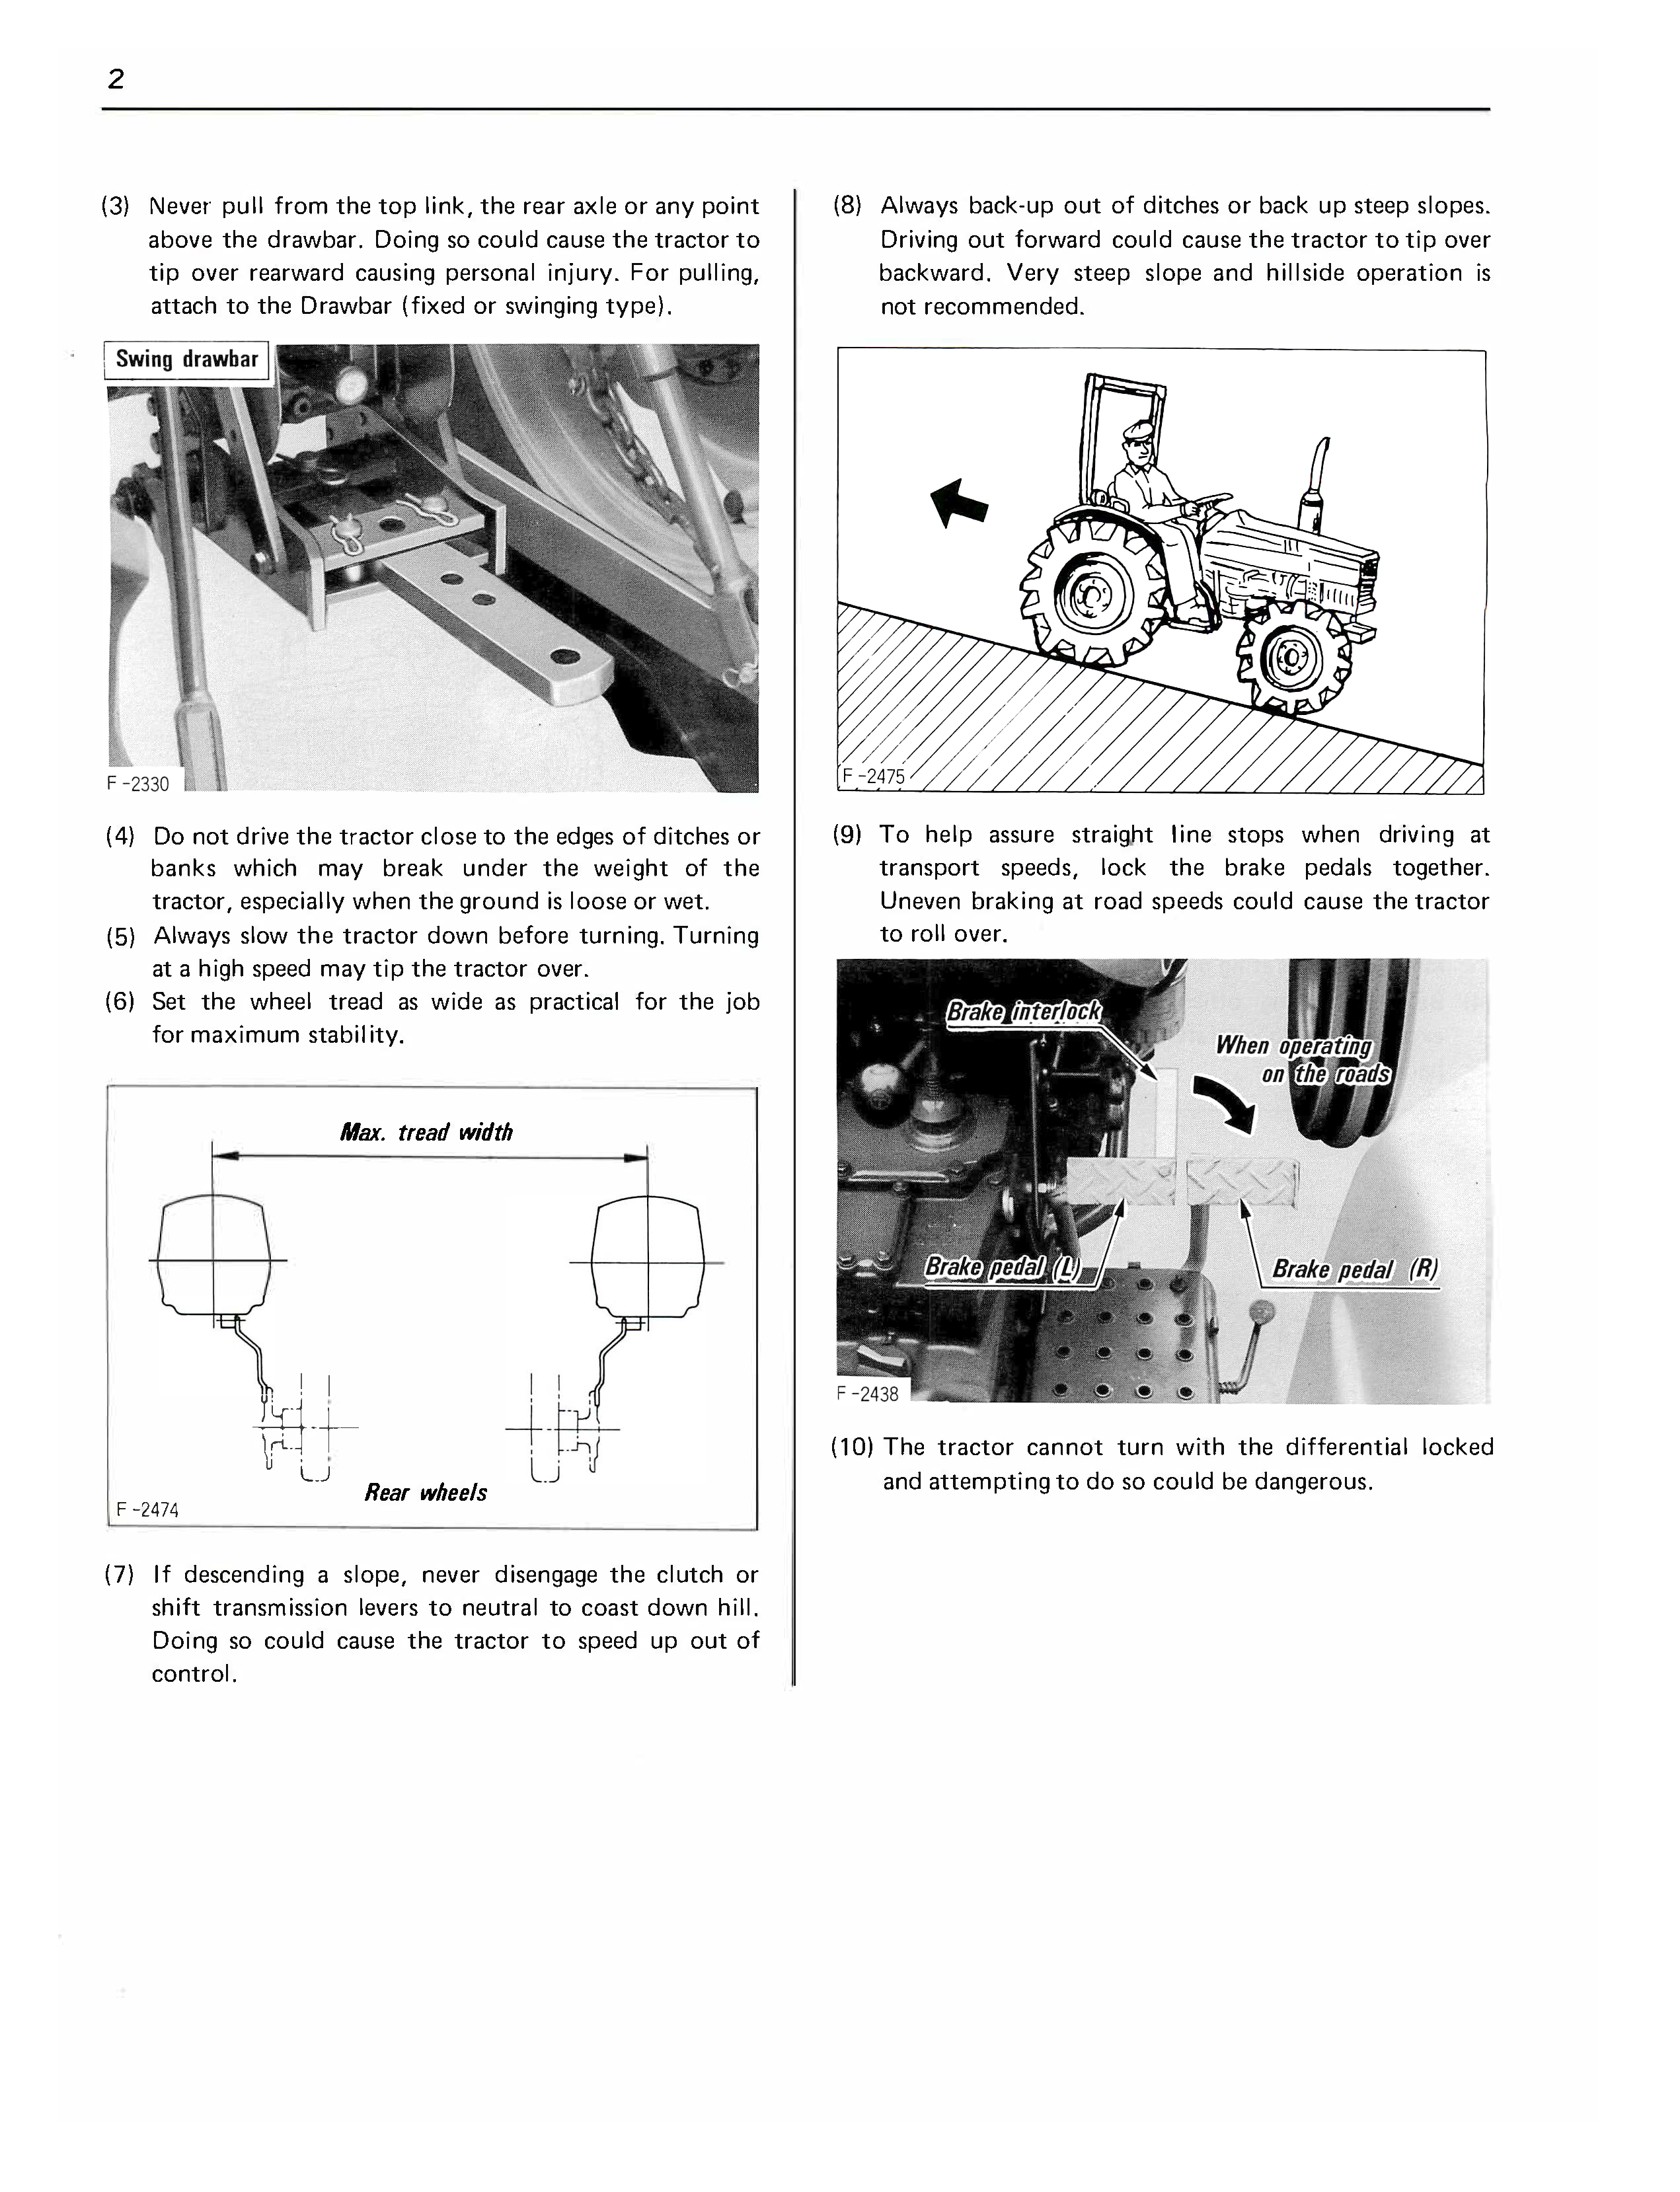 Kubota Tractor Model L305, L345, L355SS Operator's Manual